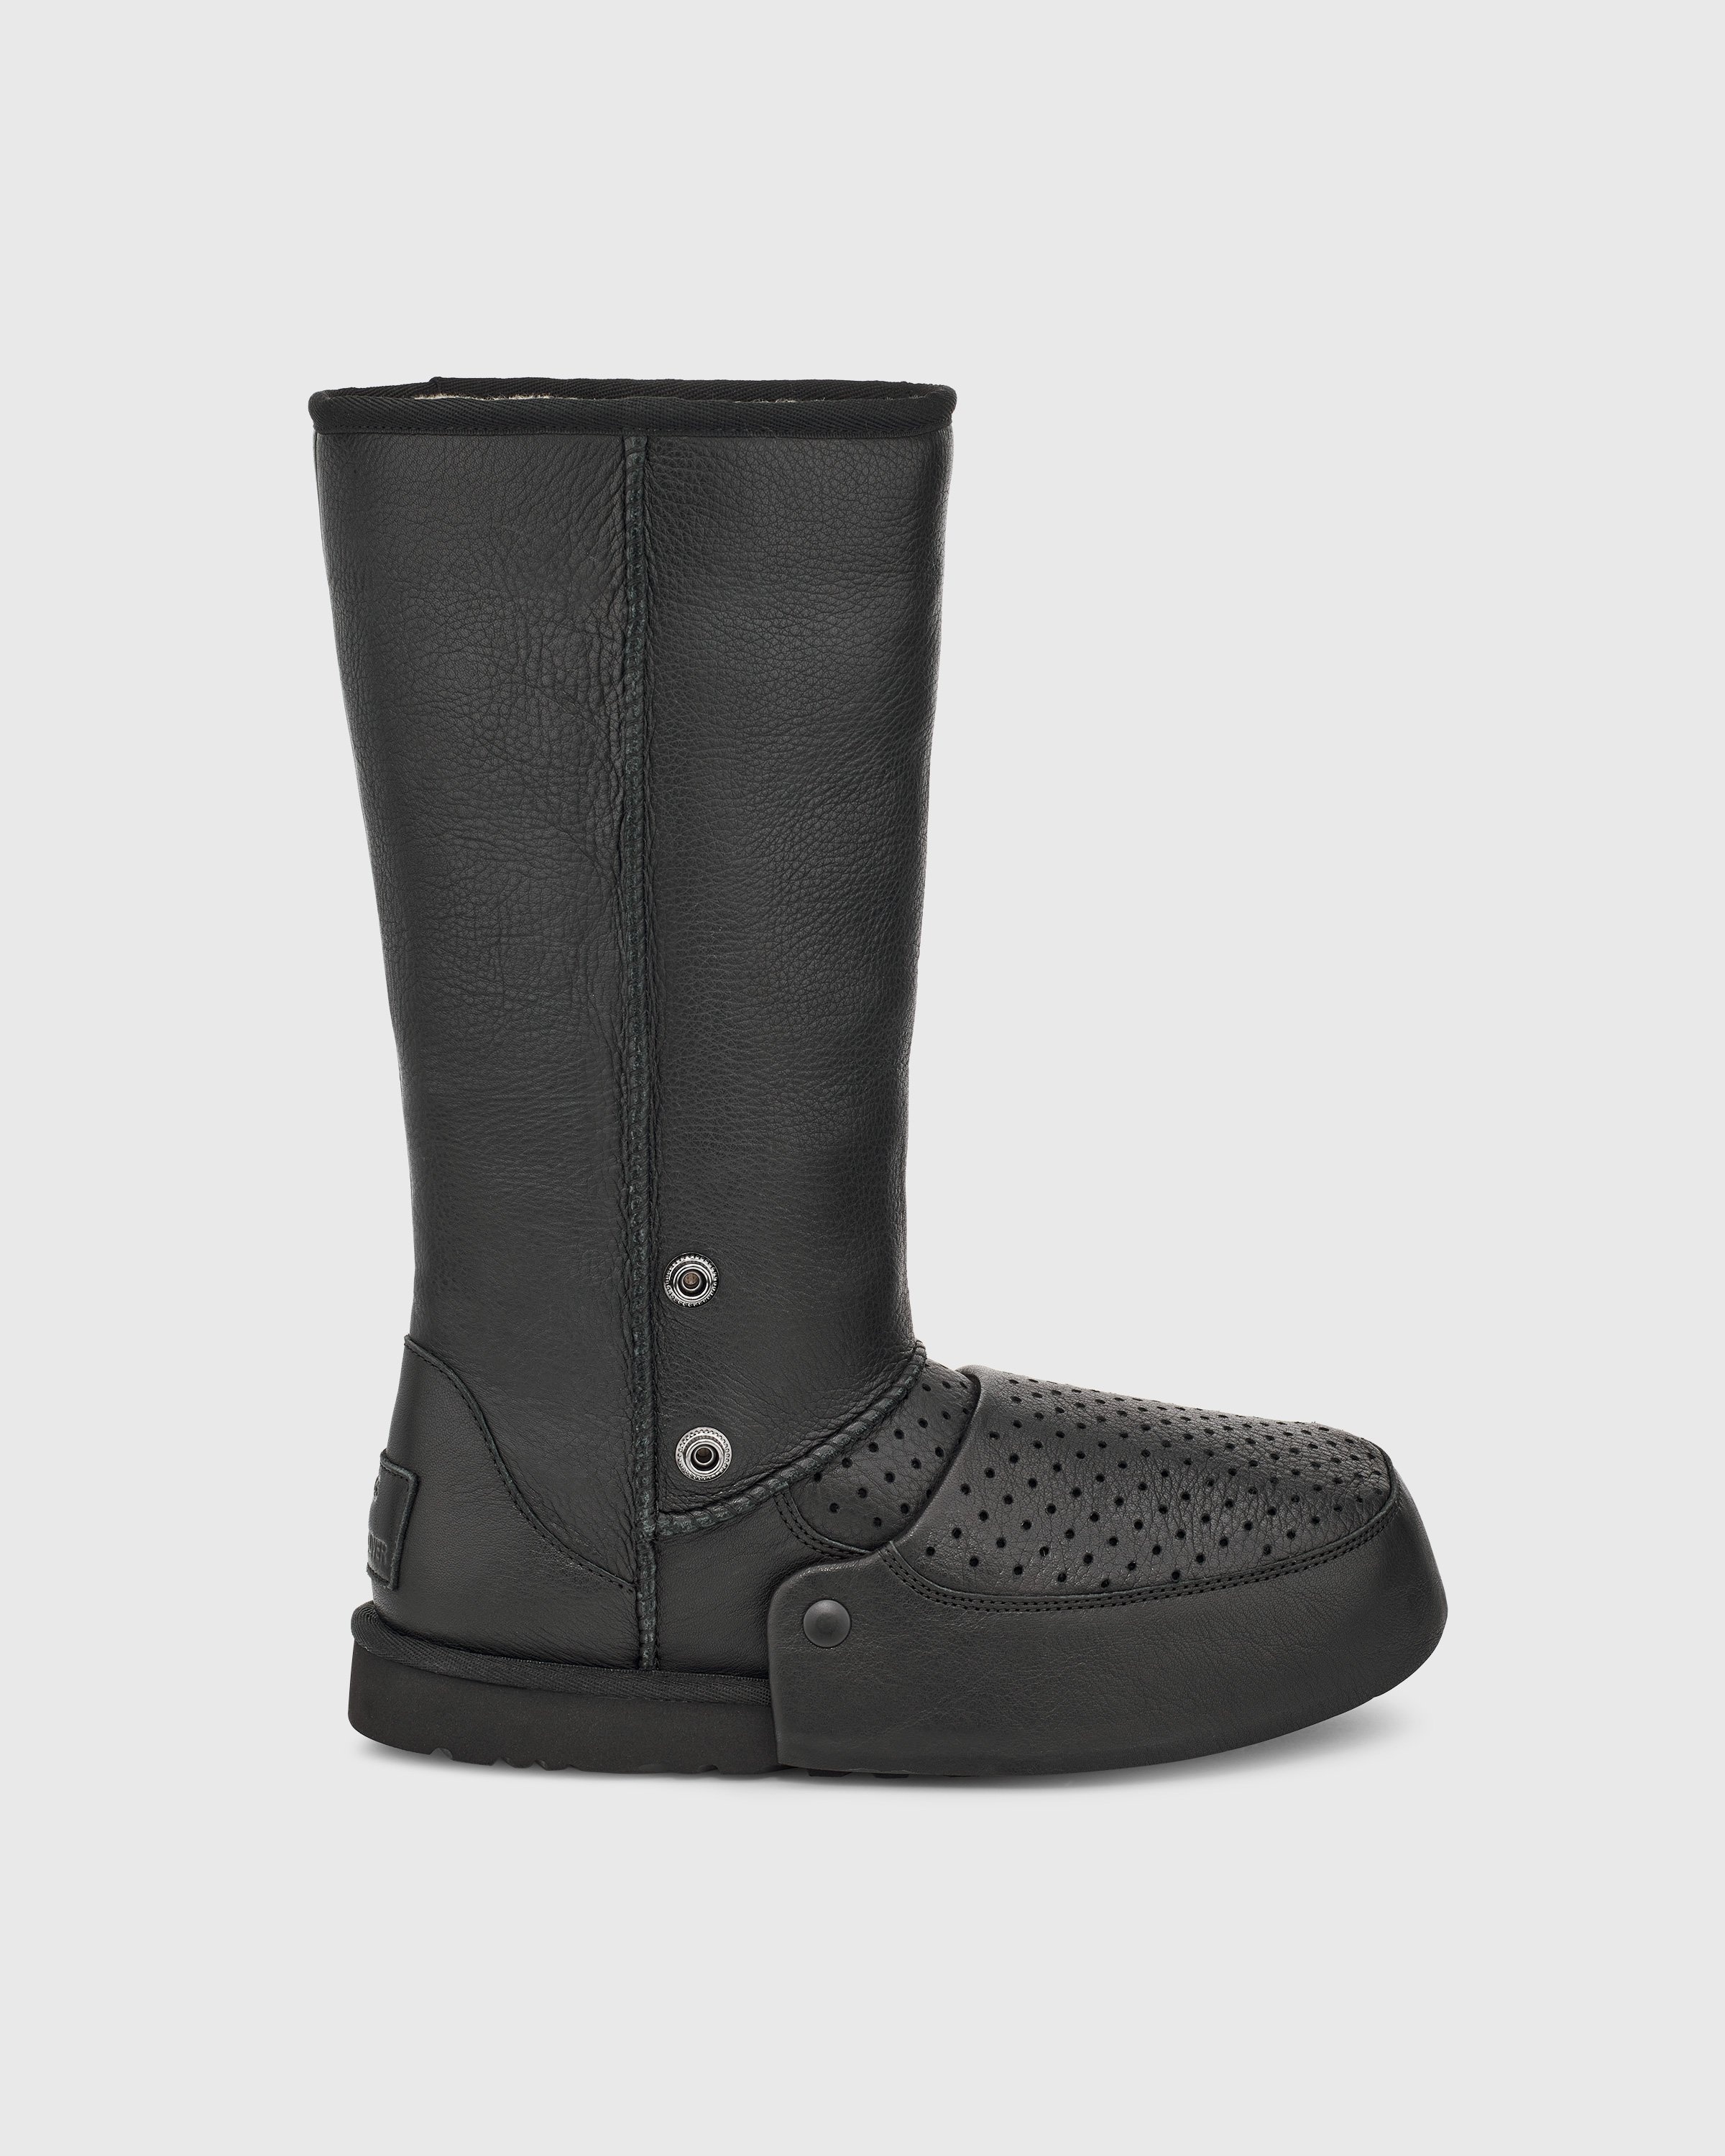 Ugg x Shayne Oliver – Tall Boot Black - Lined Boots - Black - Image 5